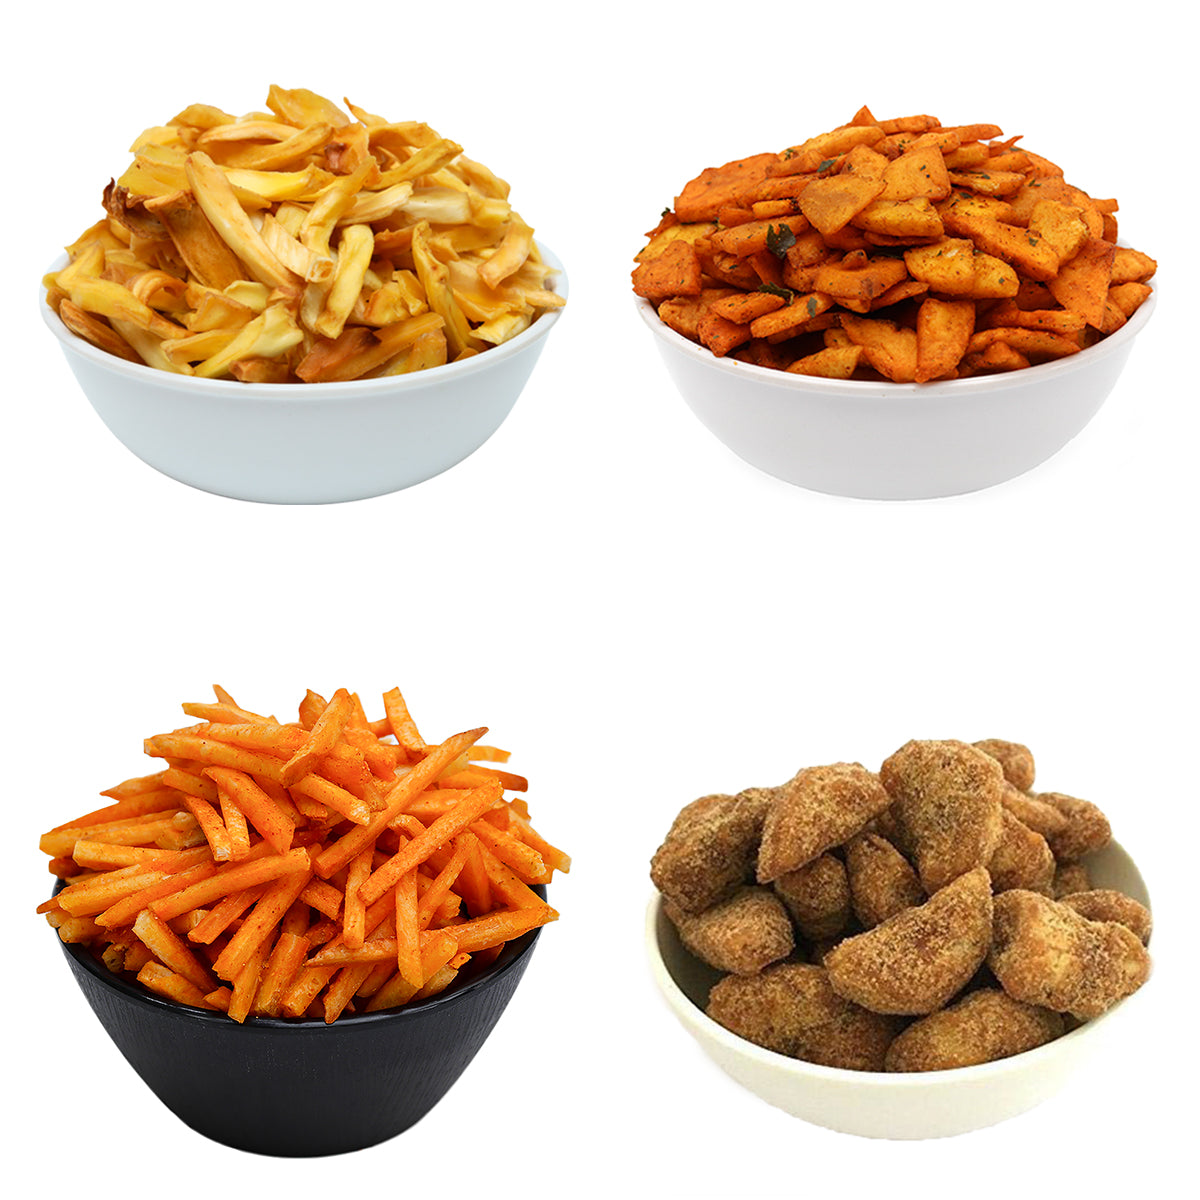 Kerala Chips Combo - Jackfruit Chips (250g), Masala Banana Chips (250g), Jaggery Coated Banana Chips (250g), Tapioca Chips (250g) - 1kg